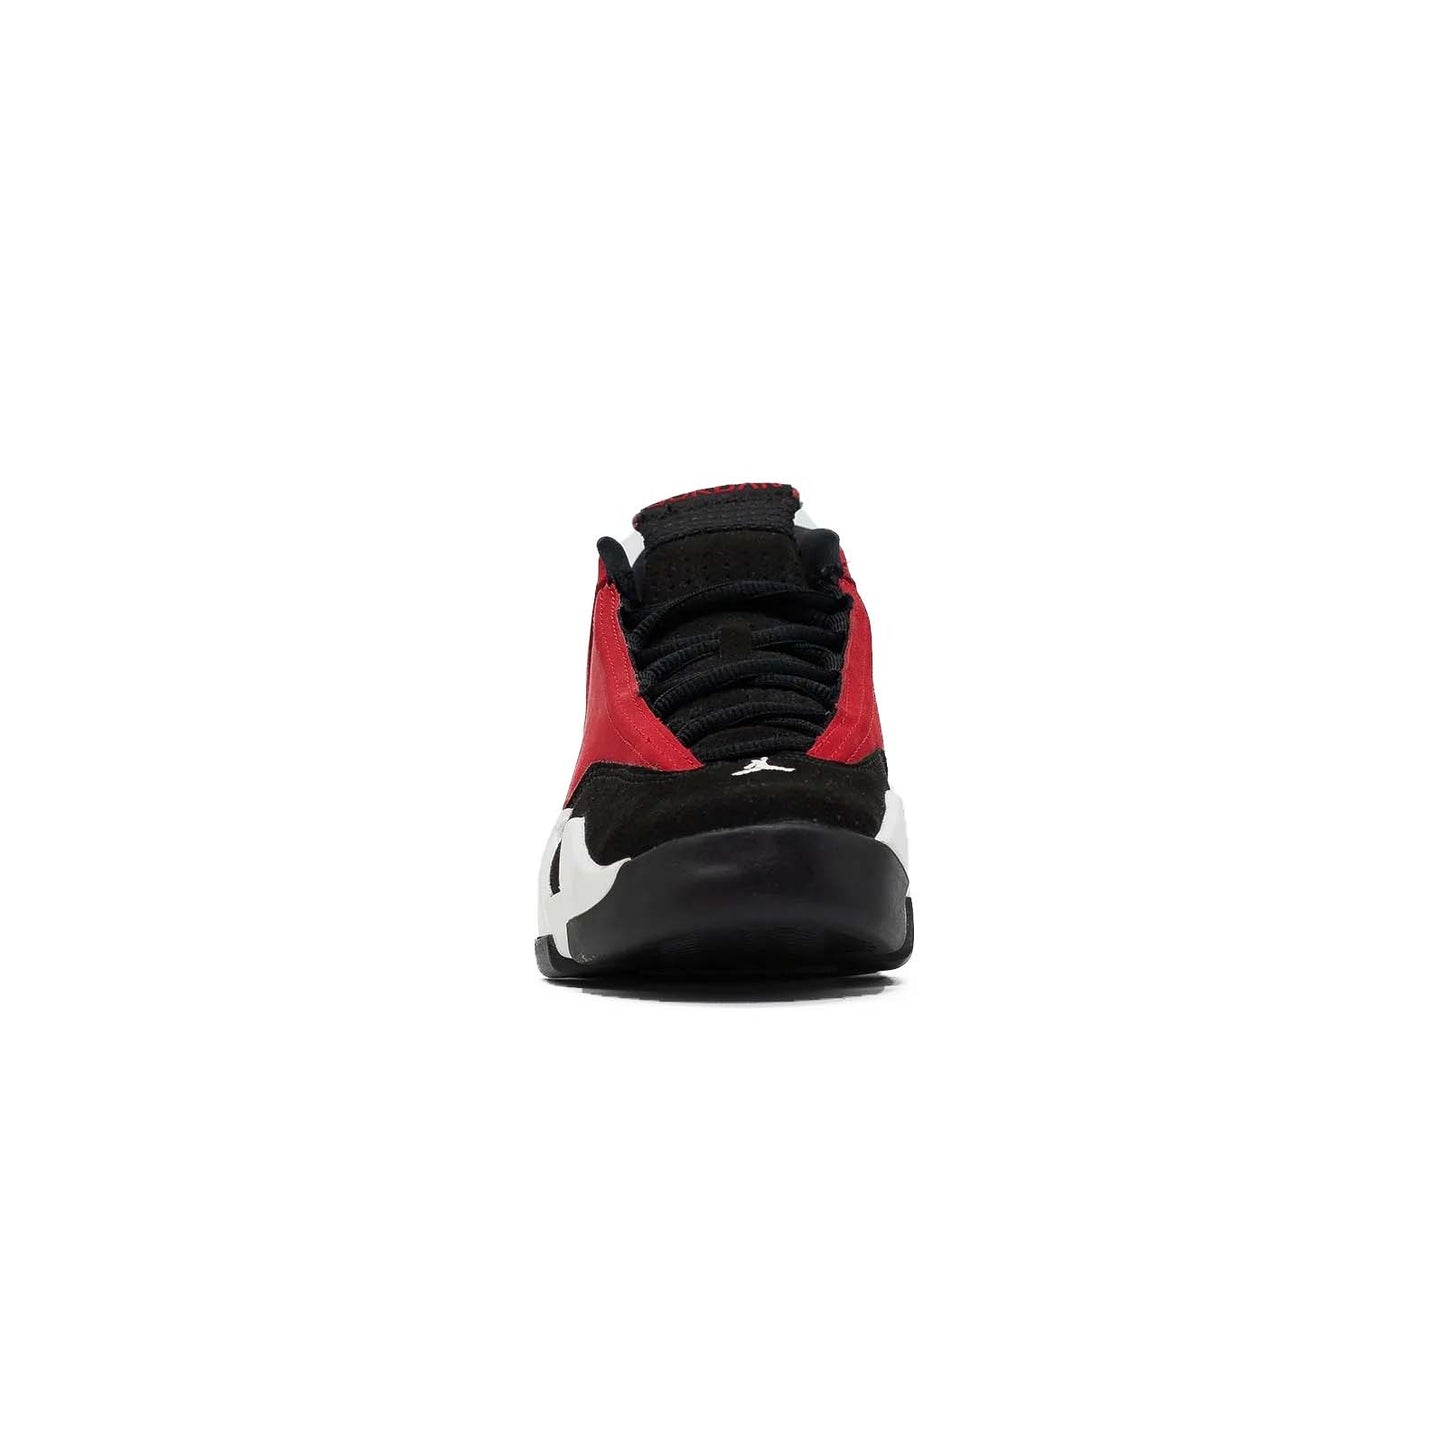 Air Jordan 14 (GS), Gym Red